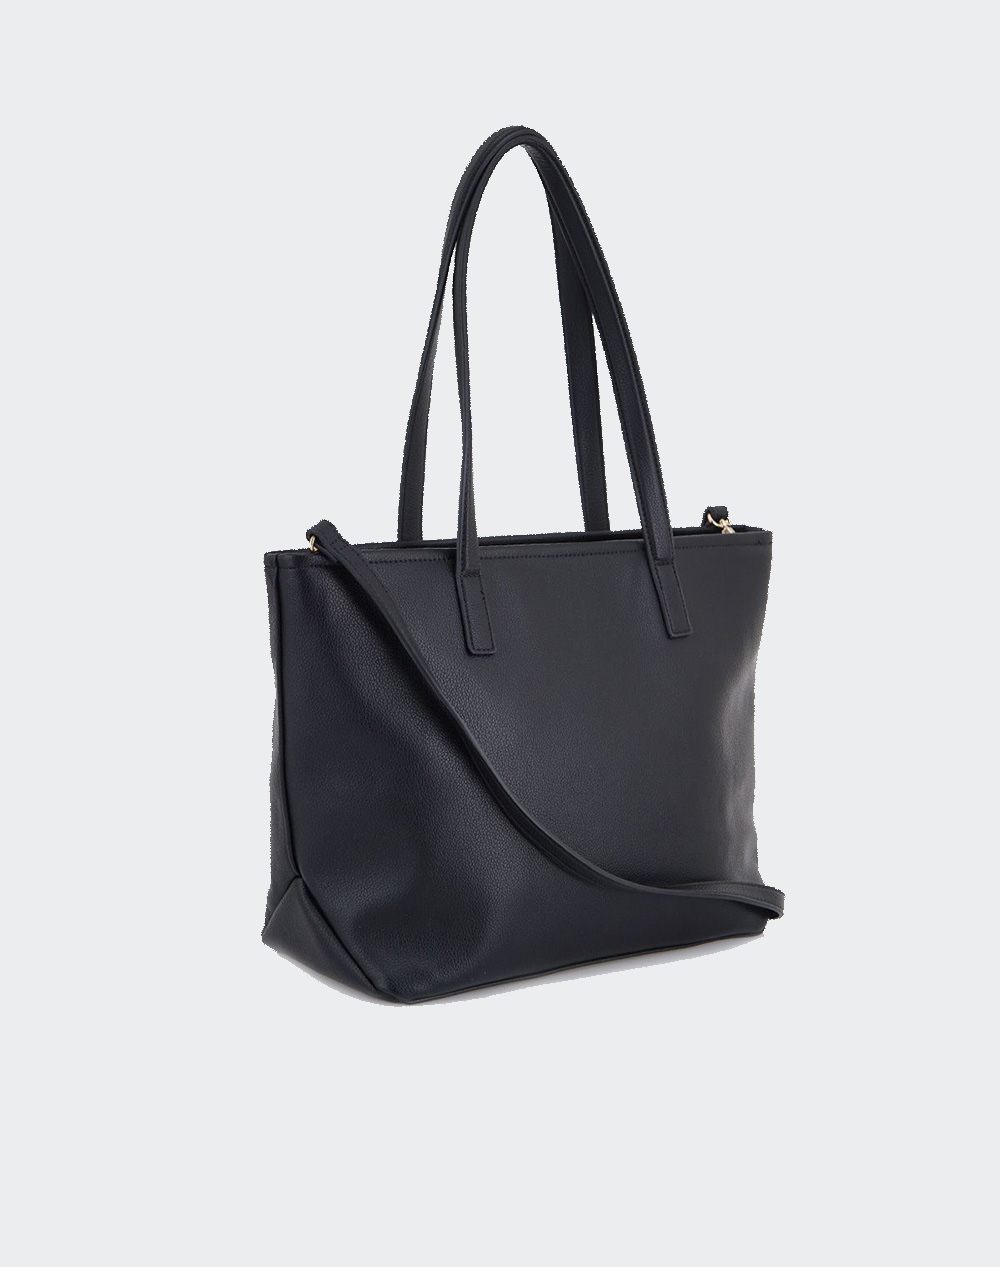 Crack pot ignorere Fortolke VALENTINO BAGS Tote Bag (Dimensions: 30 x 28 x 15.5 cm) - Black |  Politikos-shop.gr